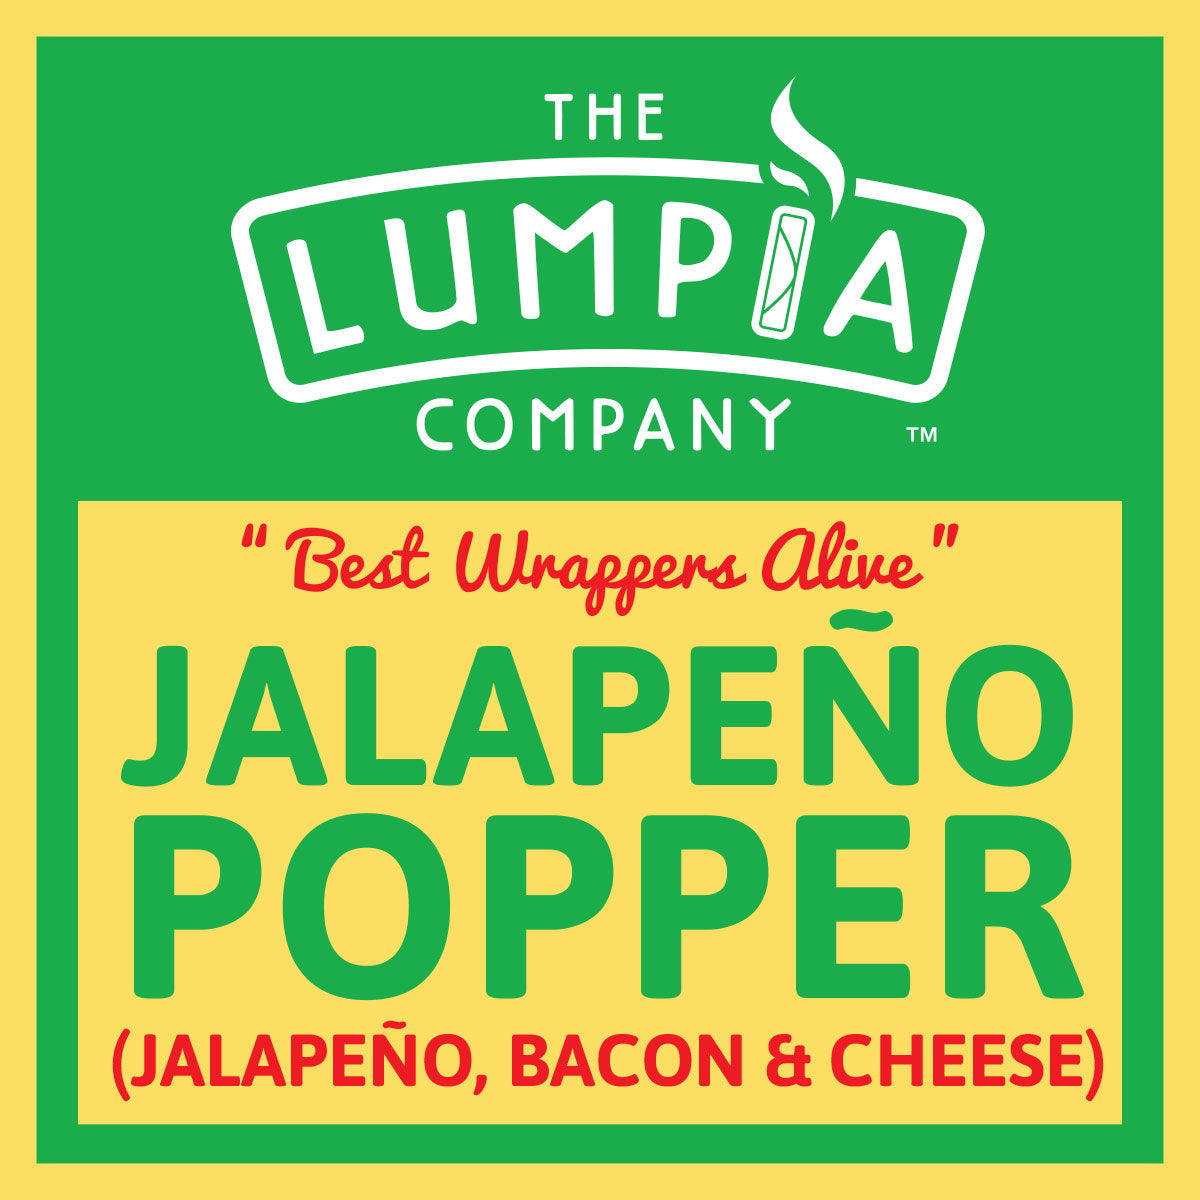 Jalapeño Popper Lumpia